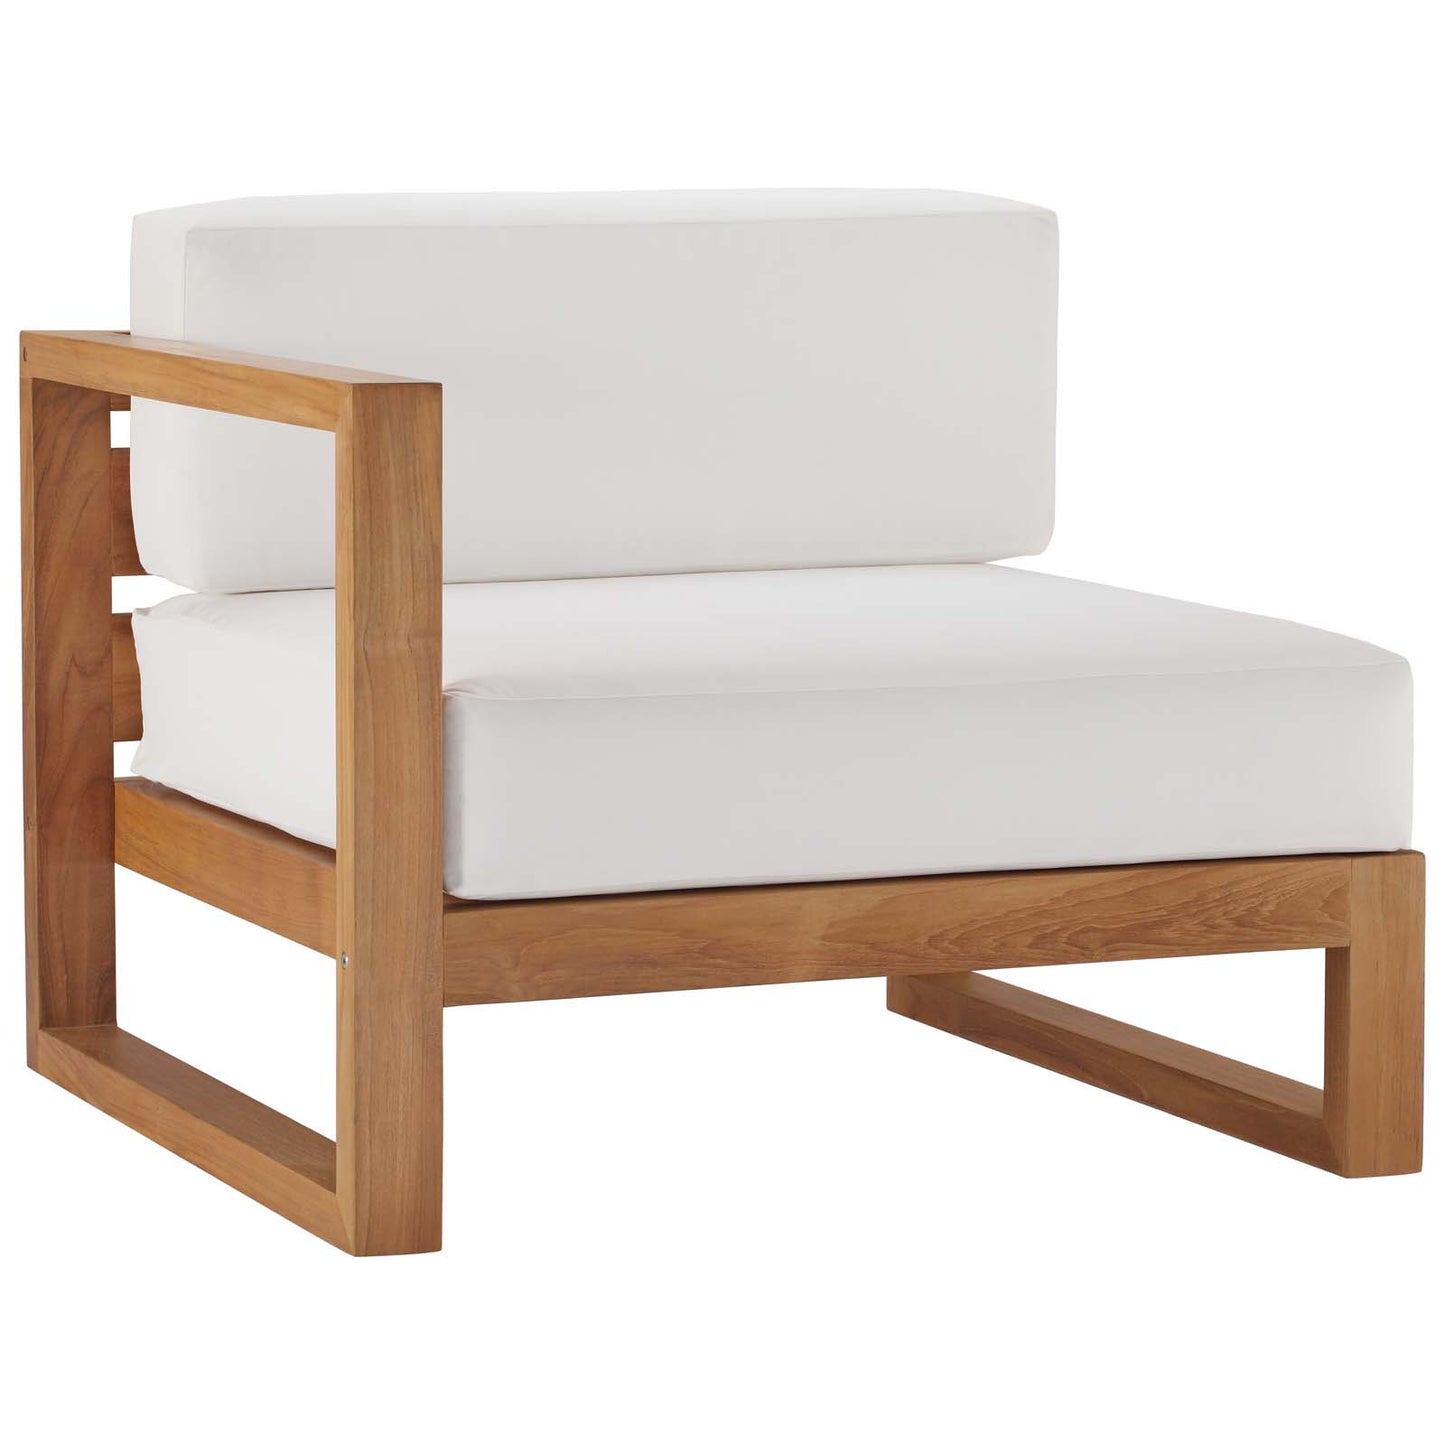 Upland Outdoor Patio Teak Wood 3-Piece Sectional Sofa Set Natural White EEI-4254-NAT-WHI-SET